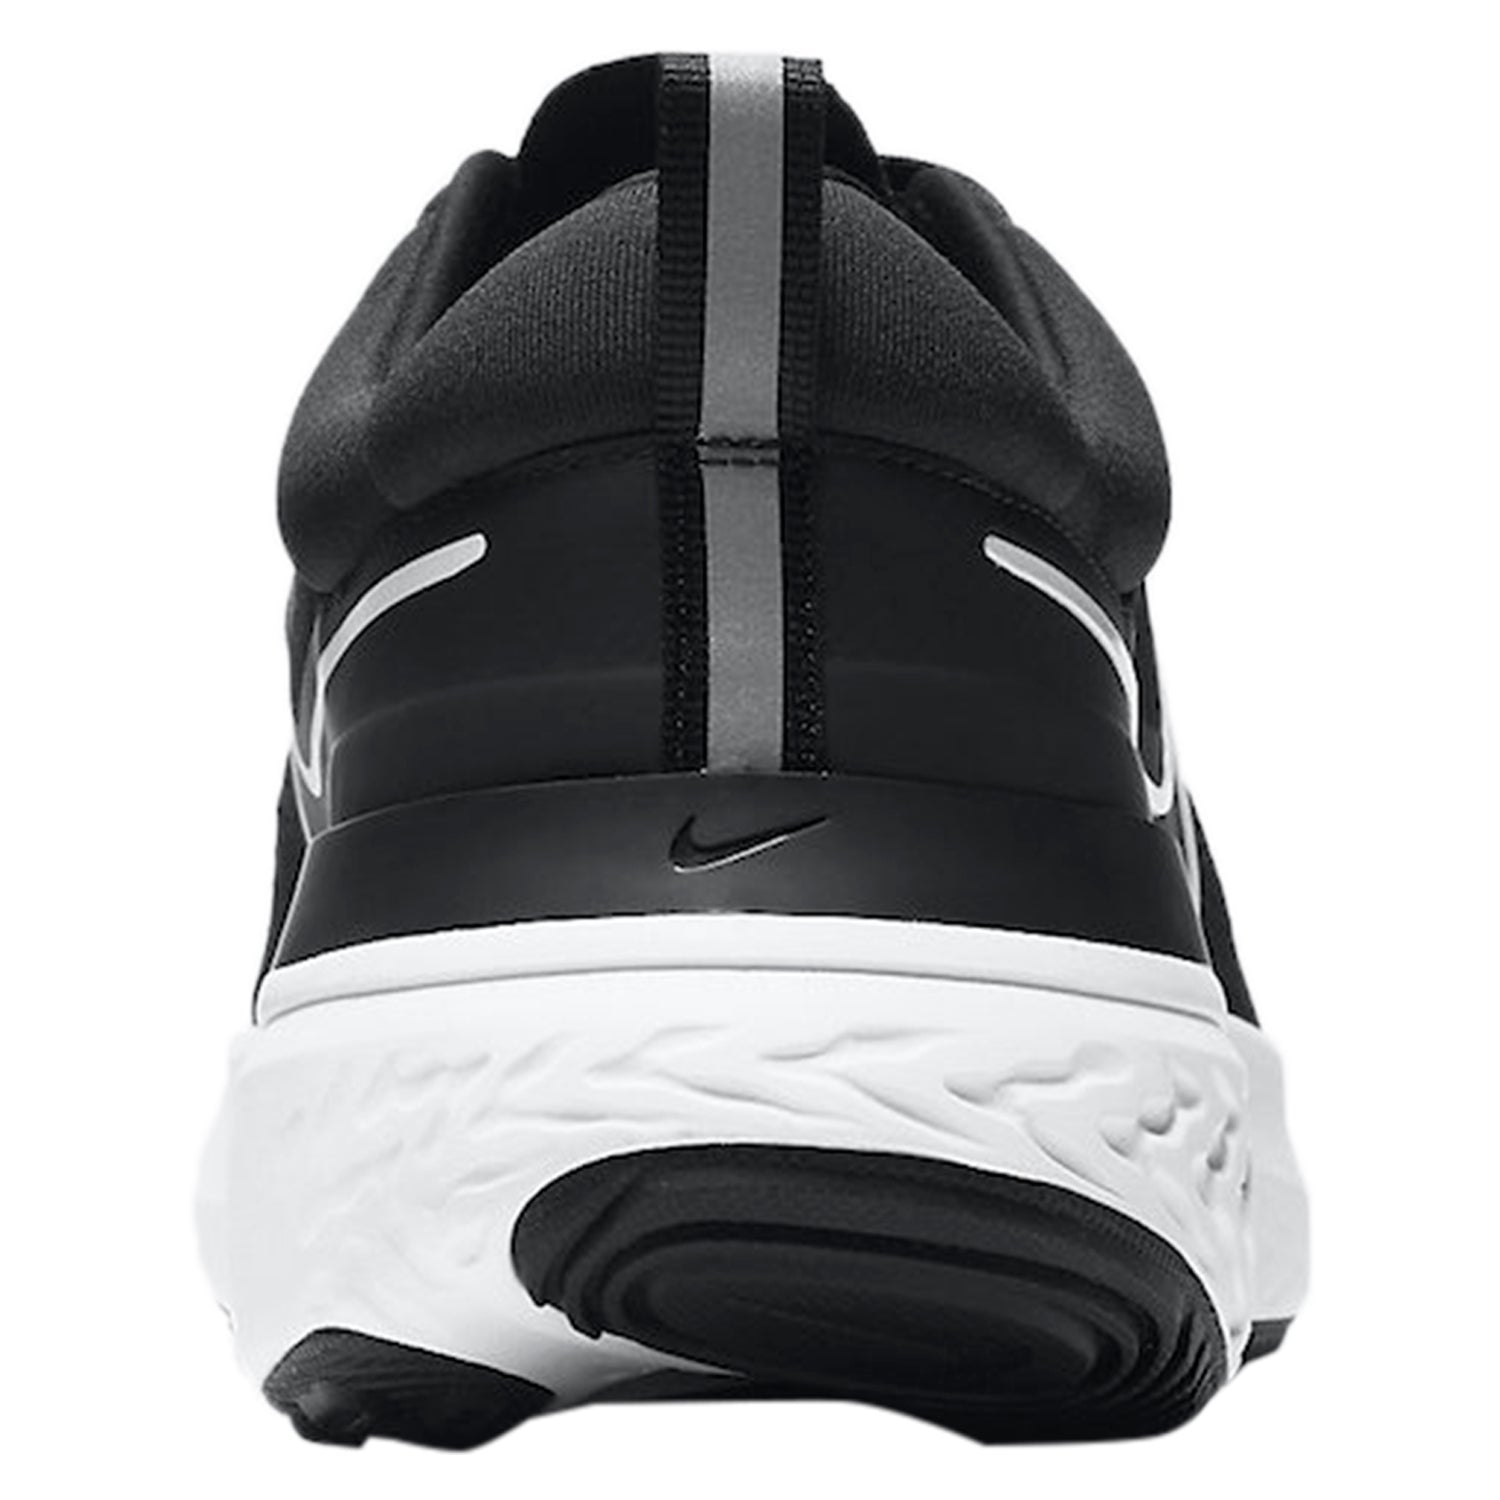 Nike React Miler 2 Mens Style : Cw7121-001